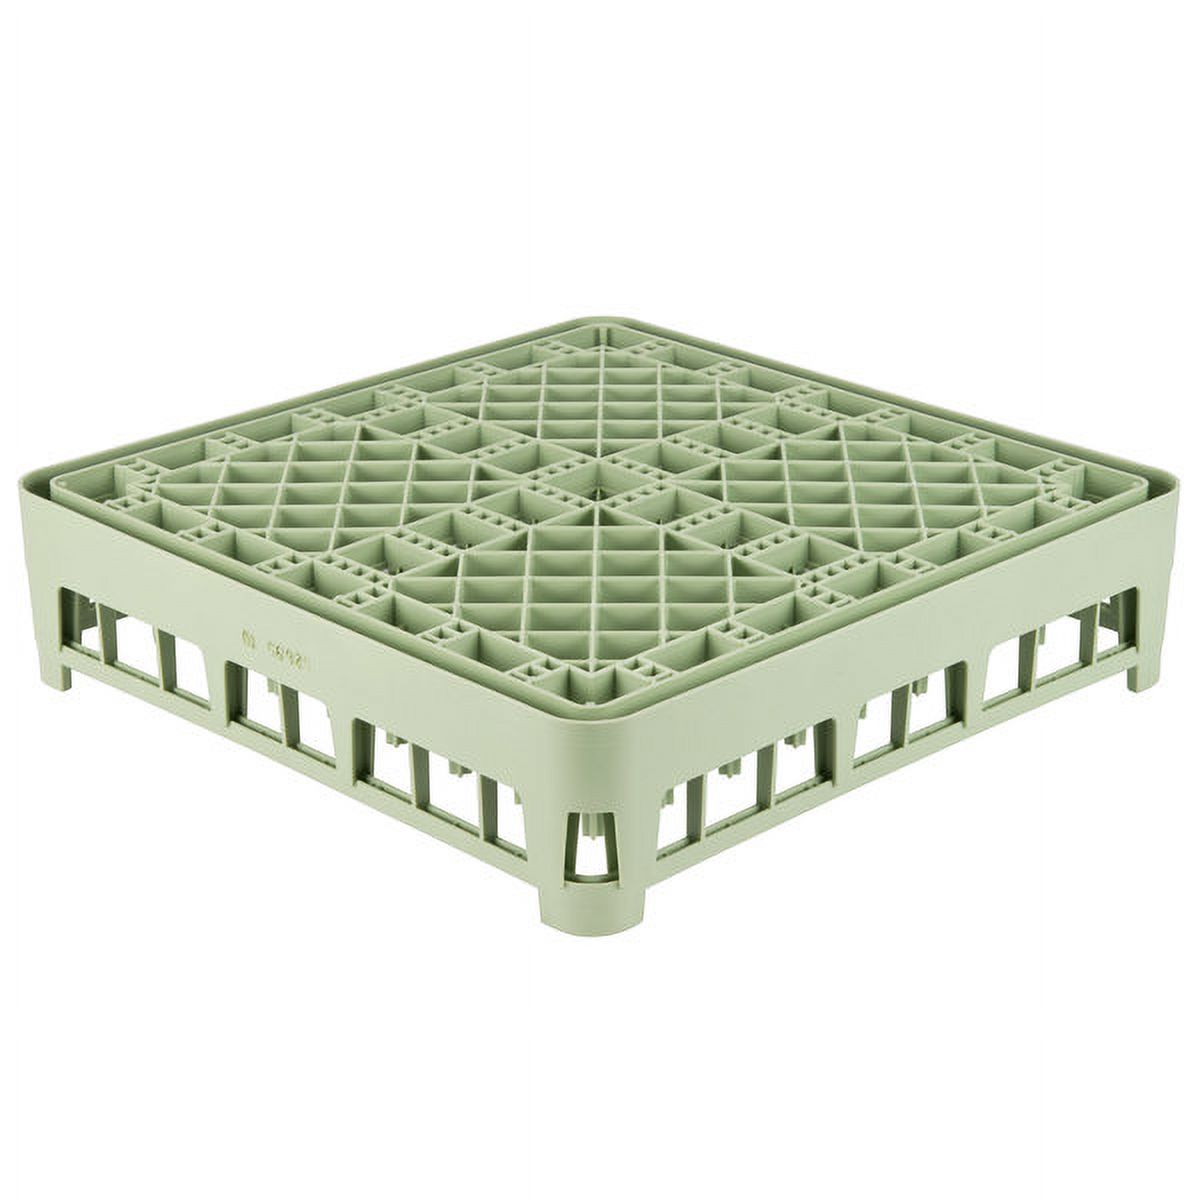 Vollrath 5269510 Light Green Full Size Plate Rack - image 2 of 2